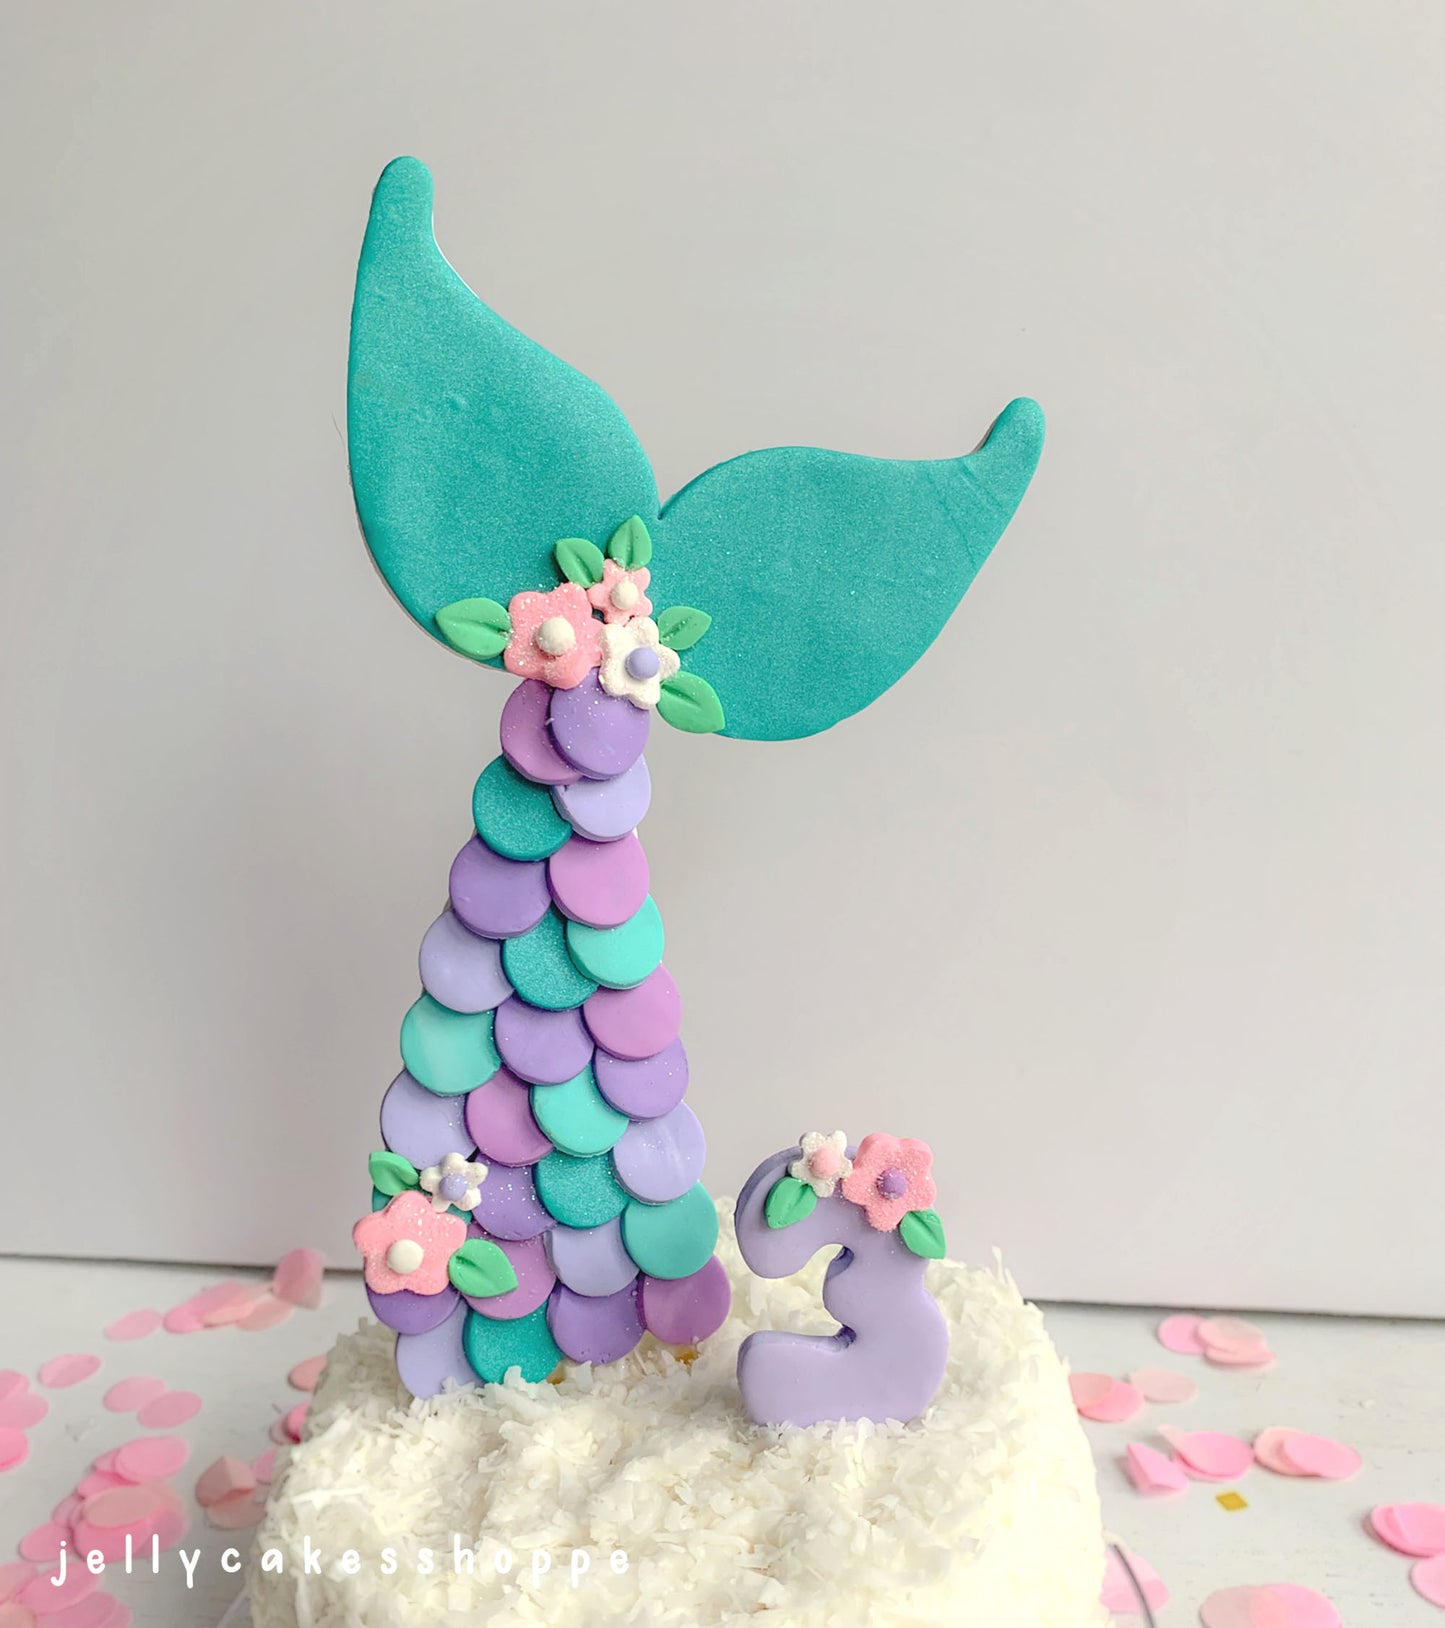 Mermaid Tail Cake Decorations